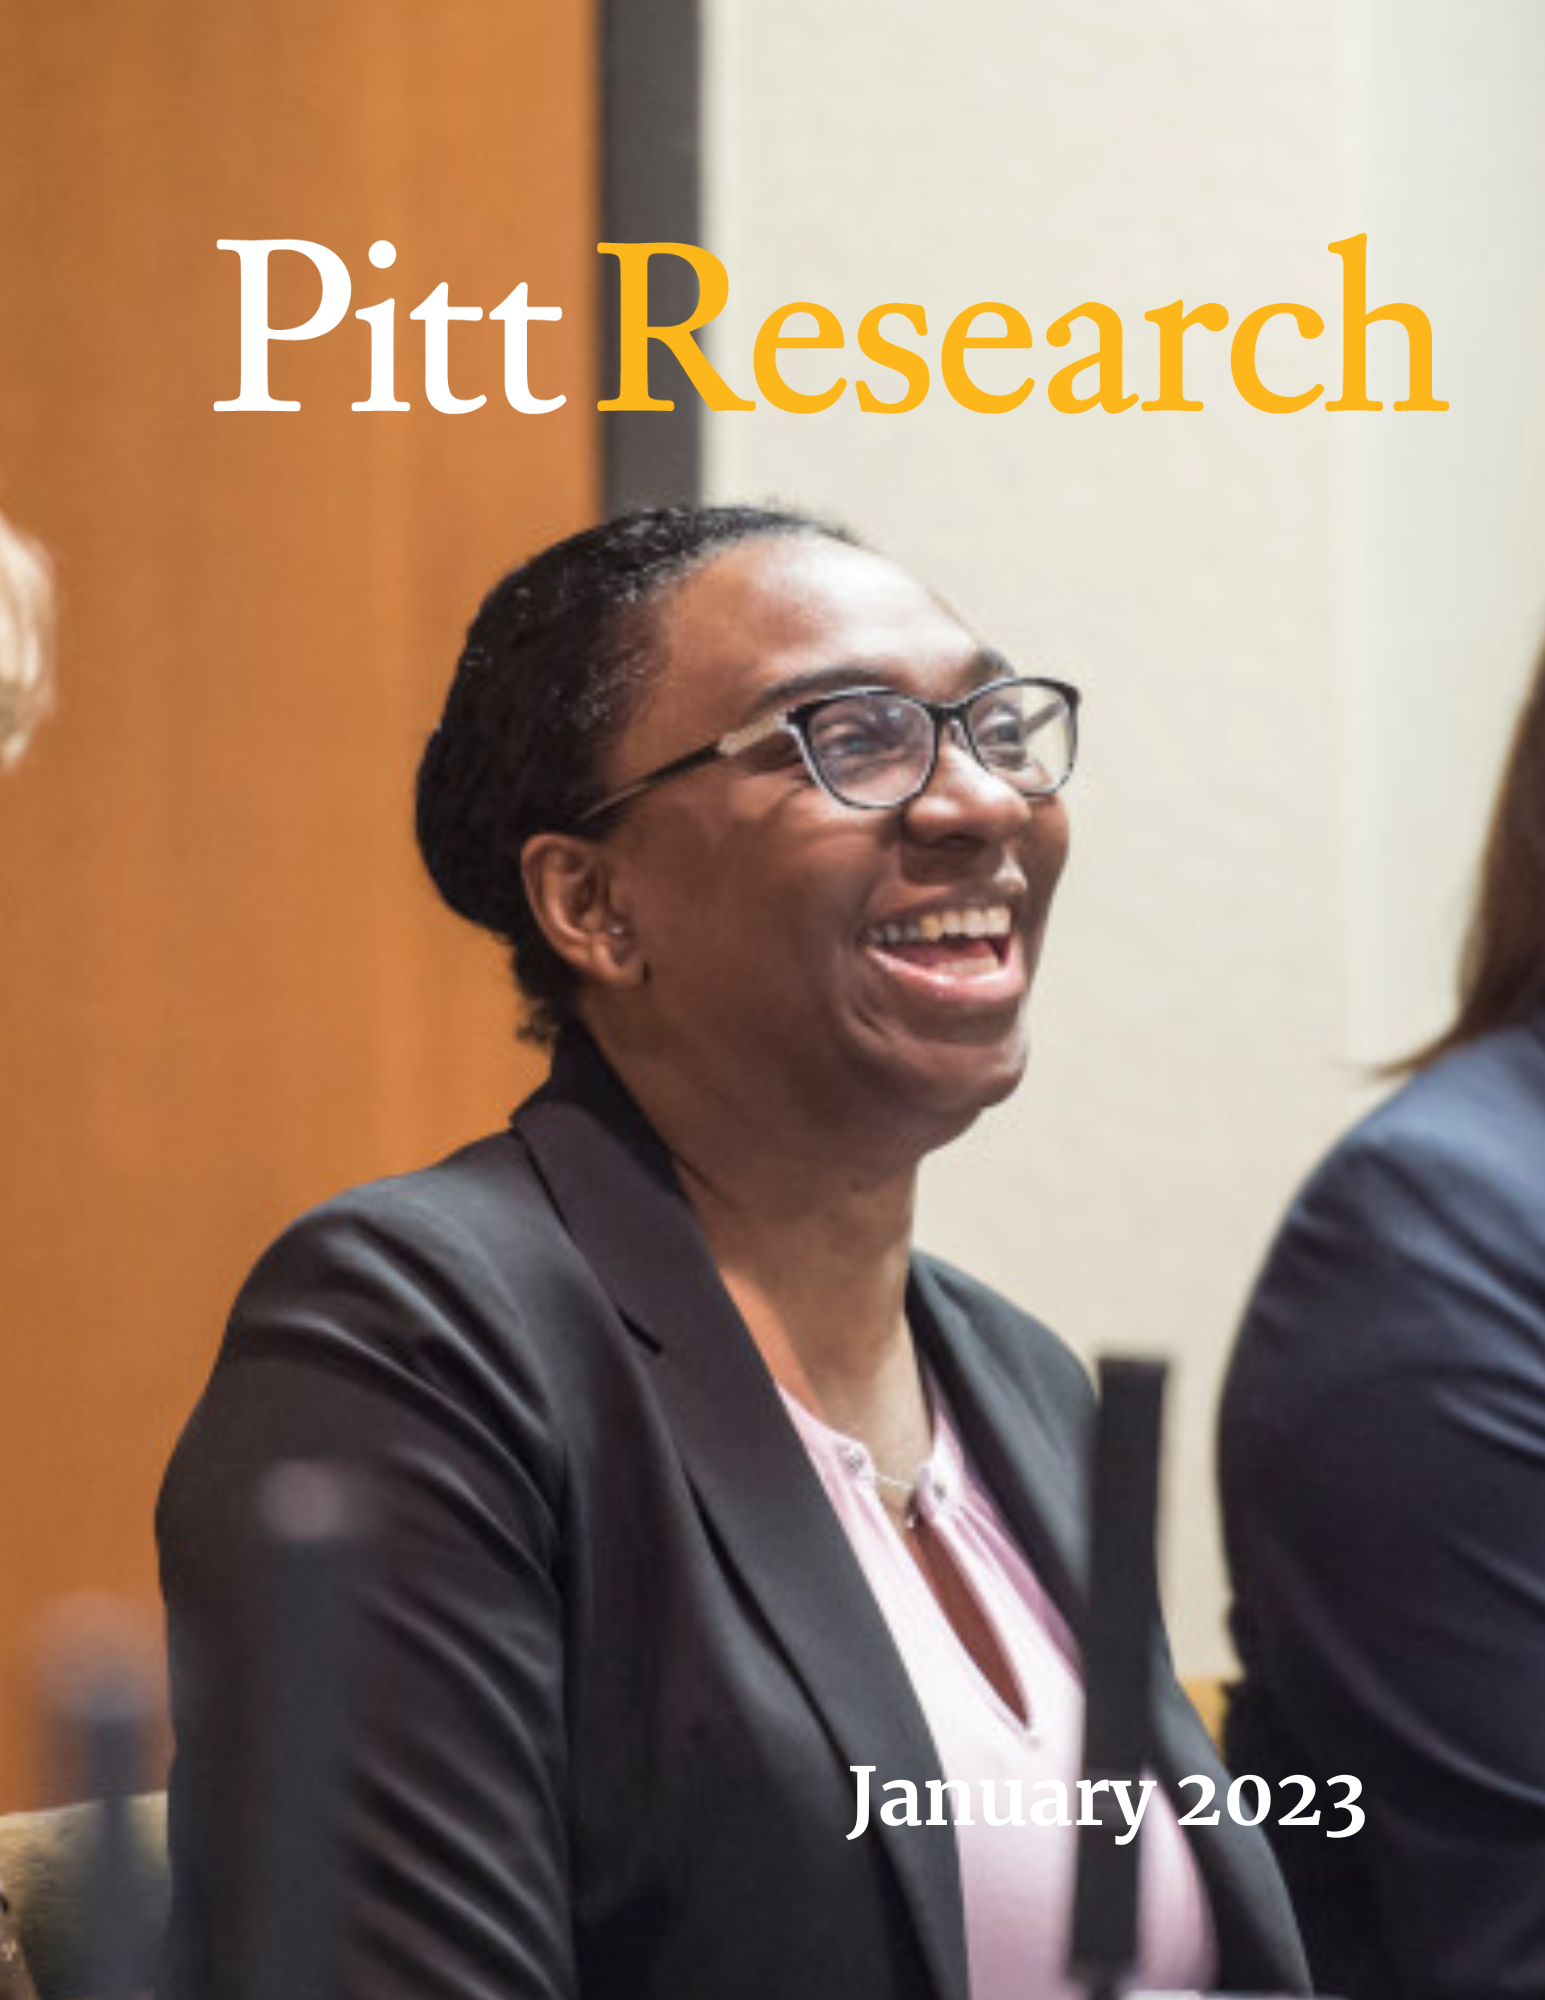 Pitt Research Newsletter for January 2023 